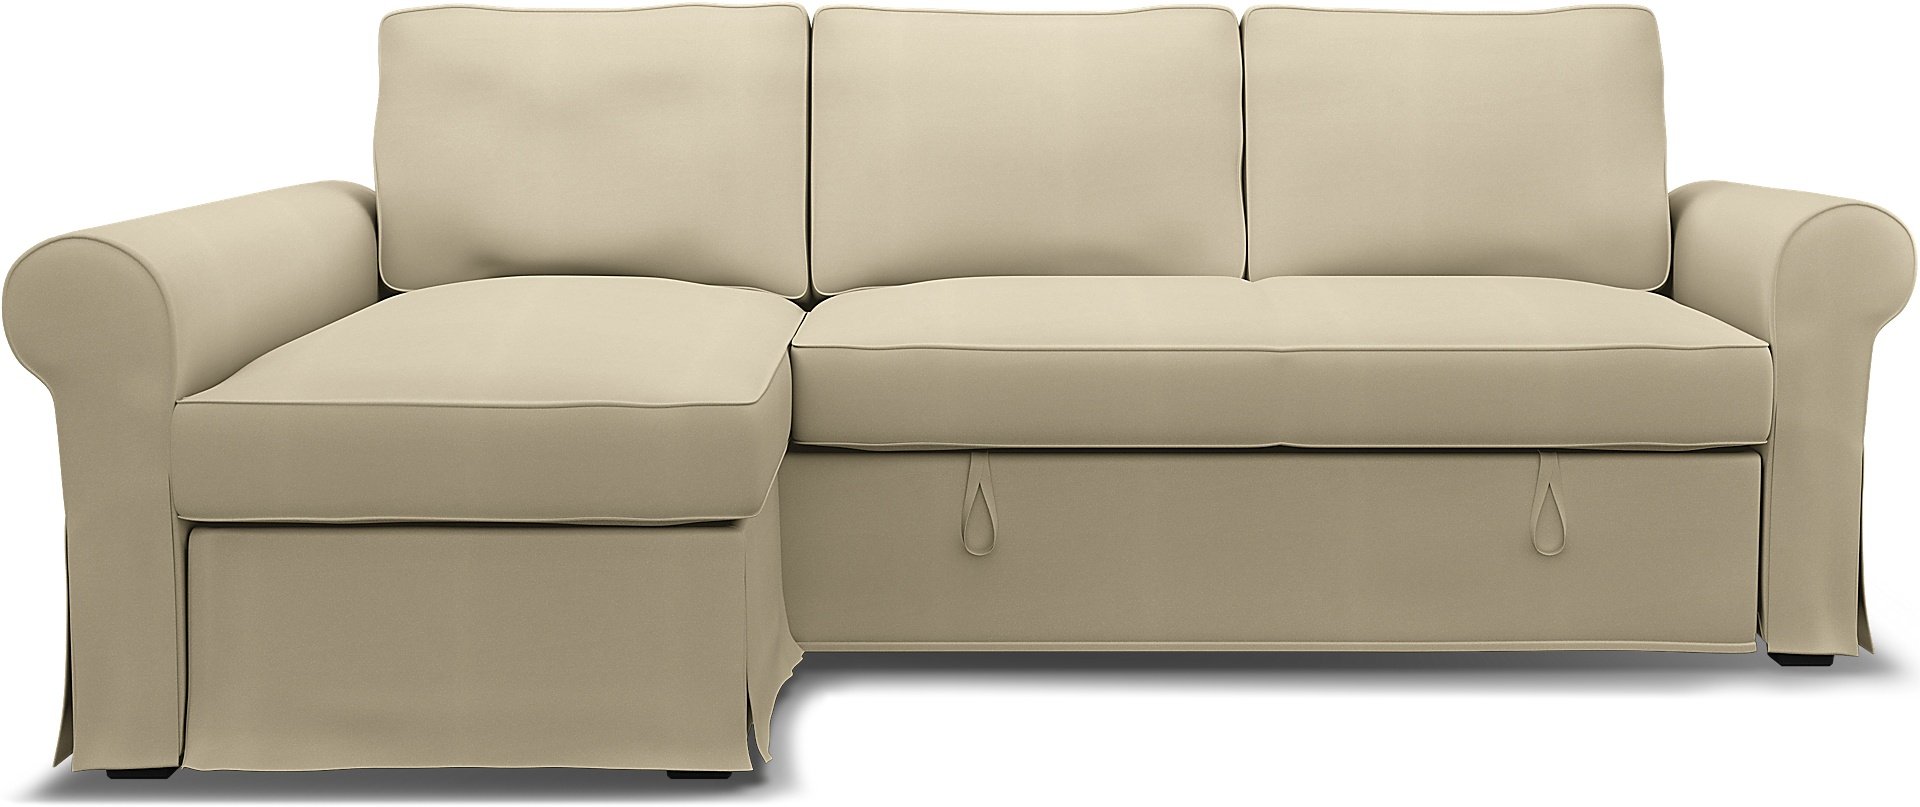 Sofa covers for IKEA Backabro Sofa Beds/Sleeper Sofas | Bemz